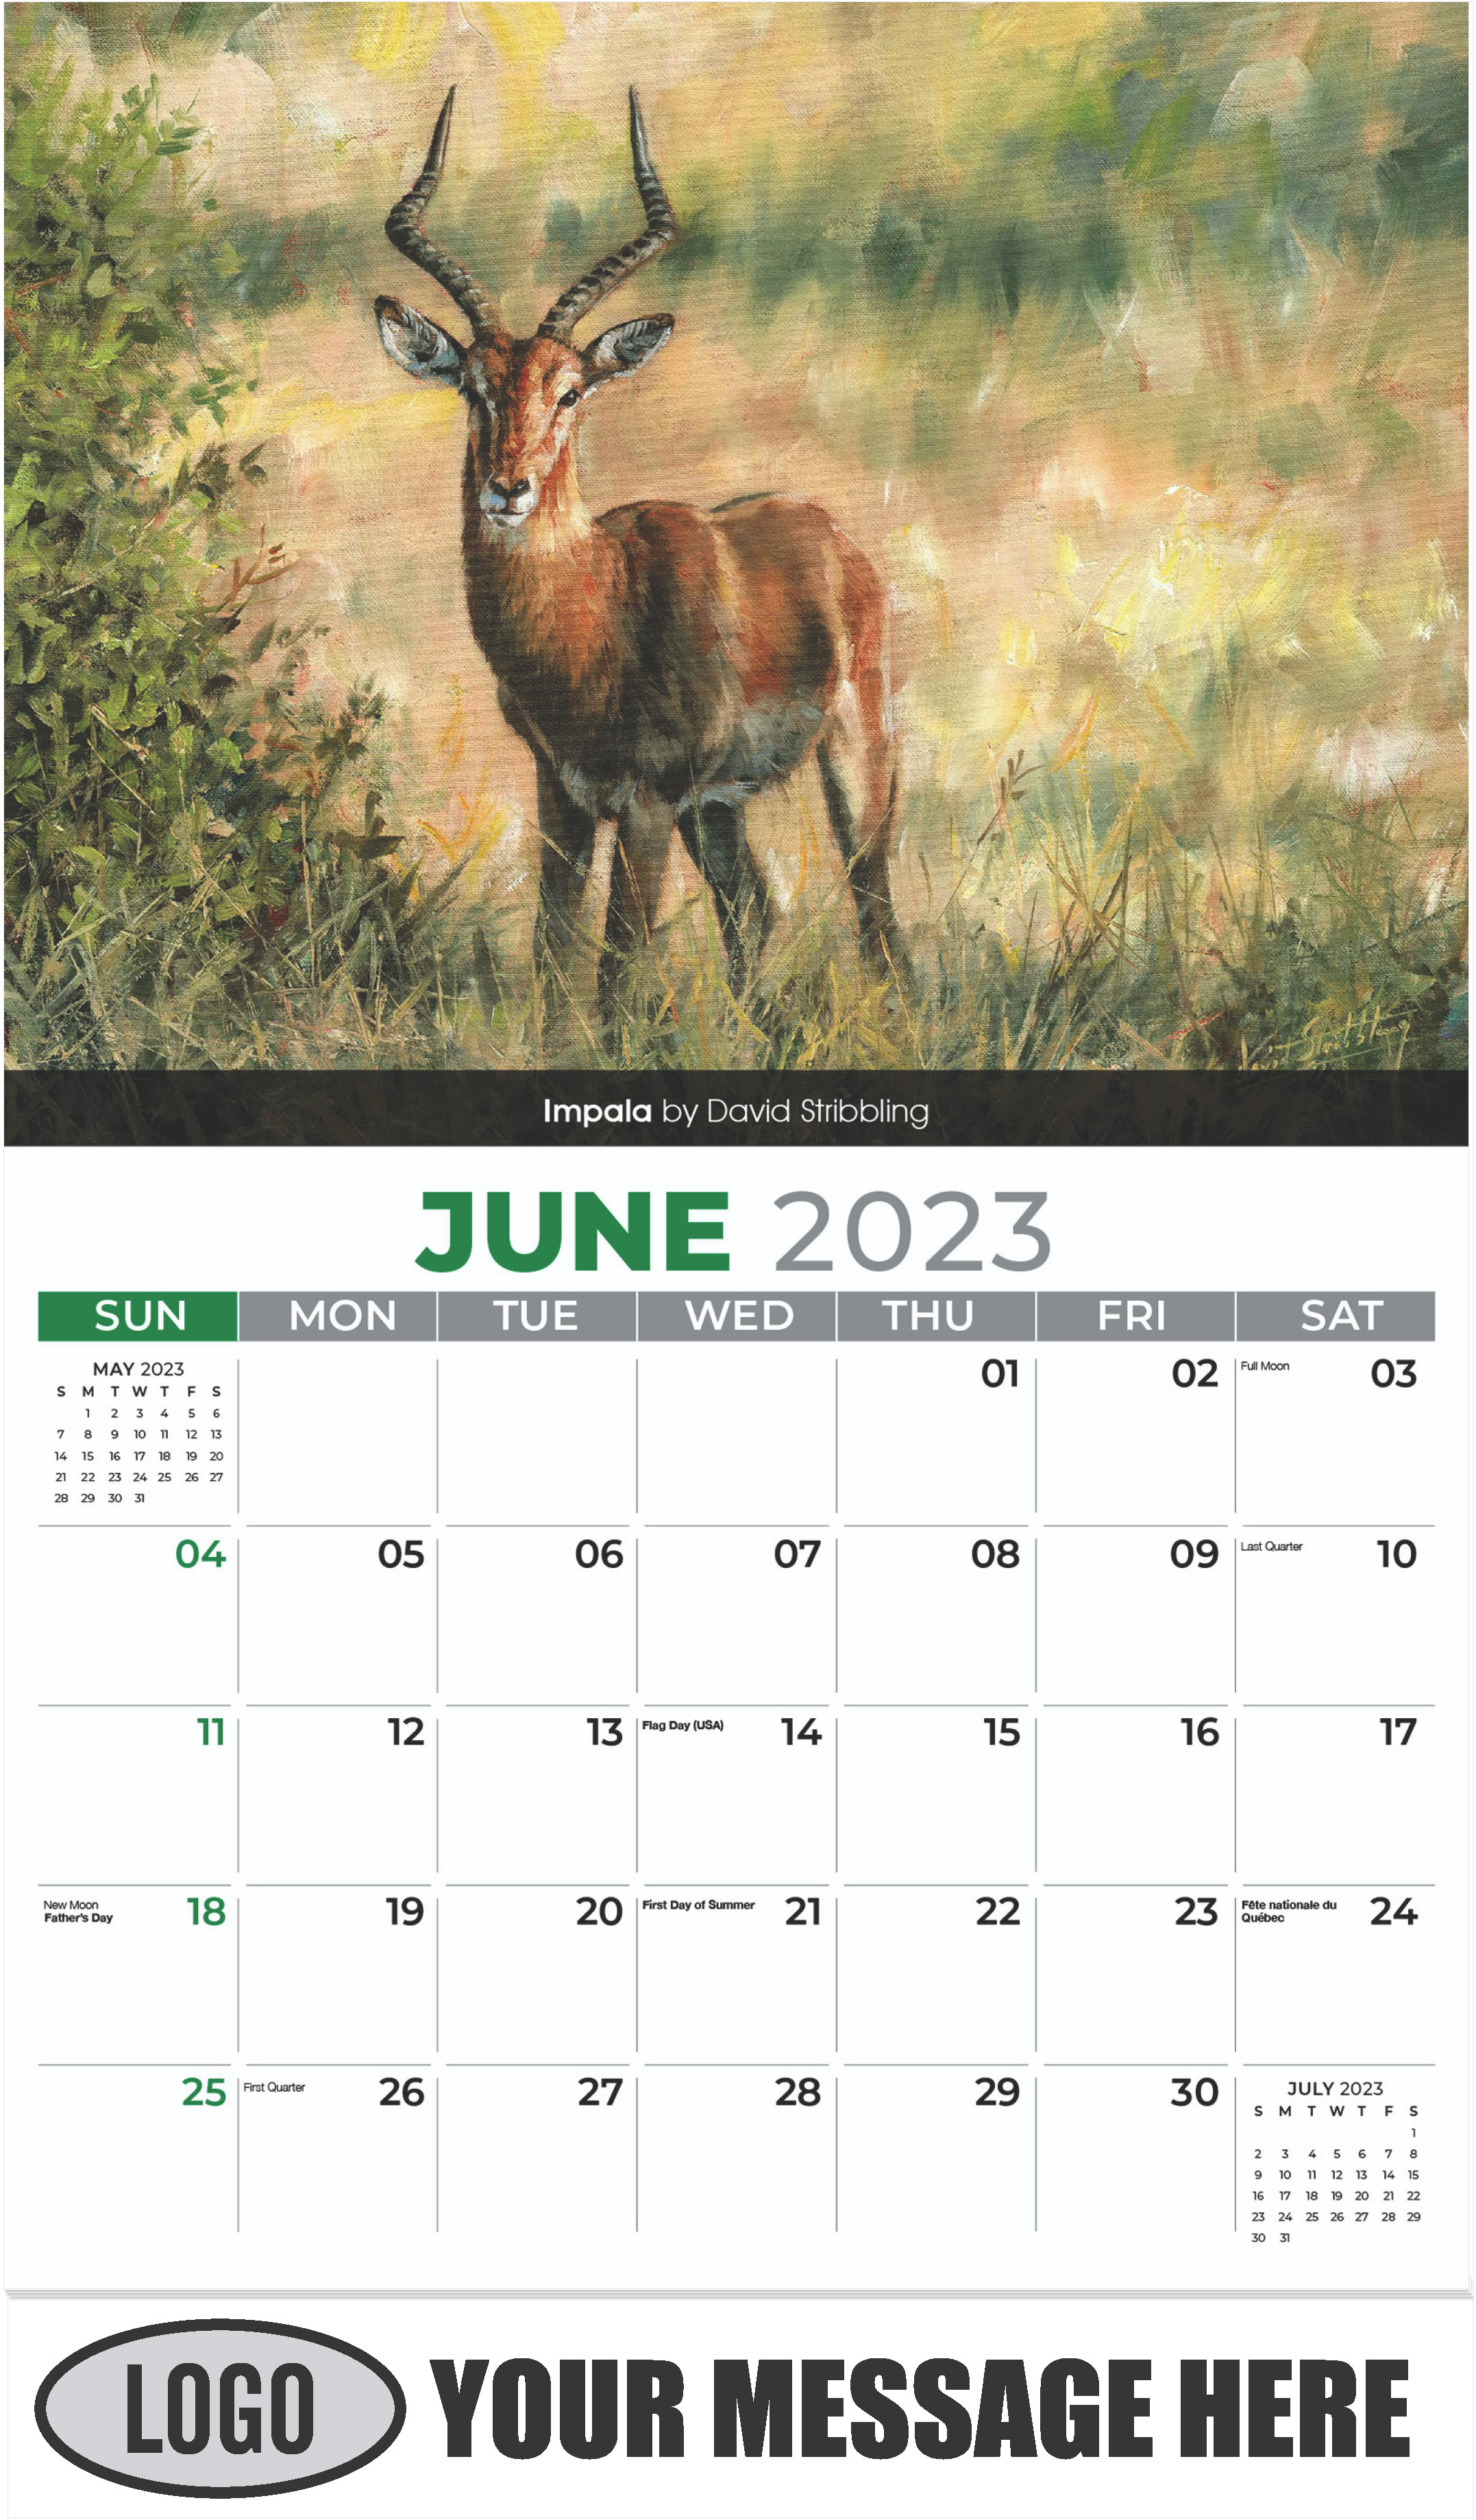 Impala by David Stribbling - June - Wildlife Portraits 2023 Promotional Calendar